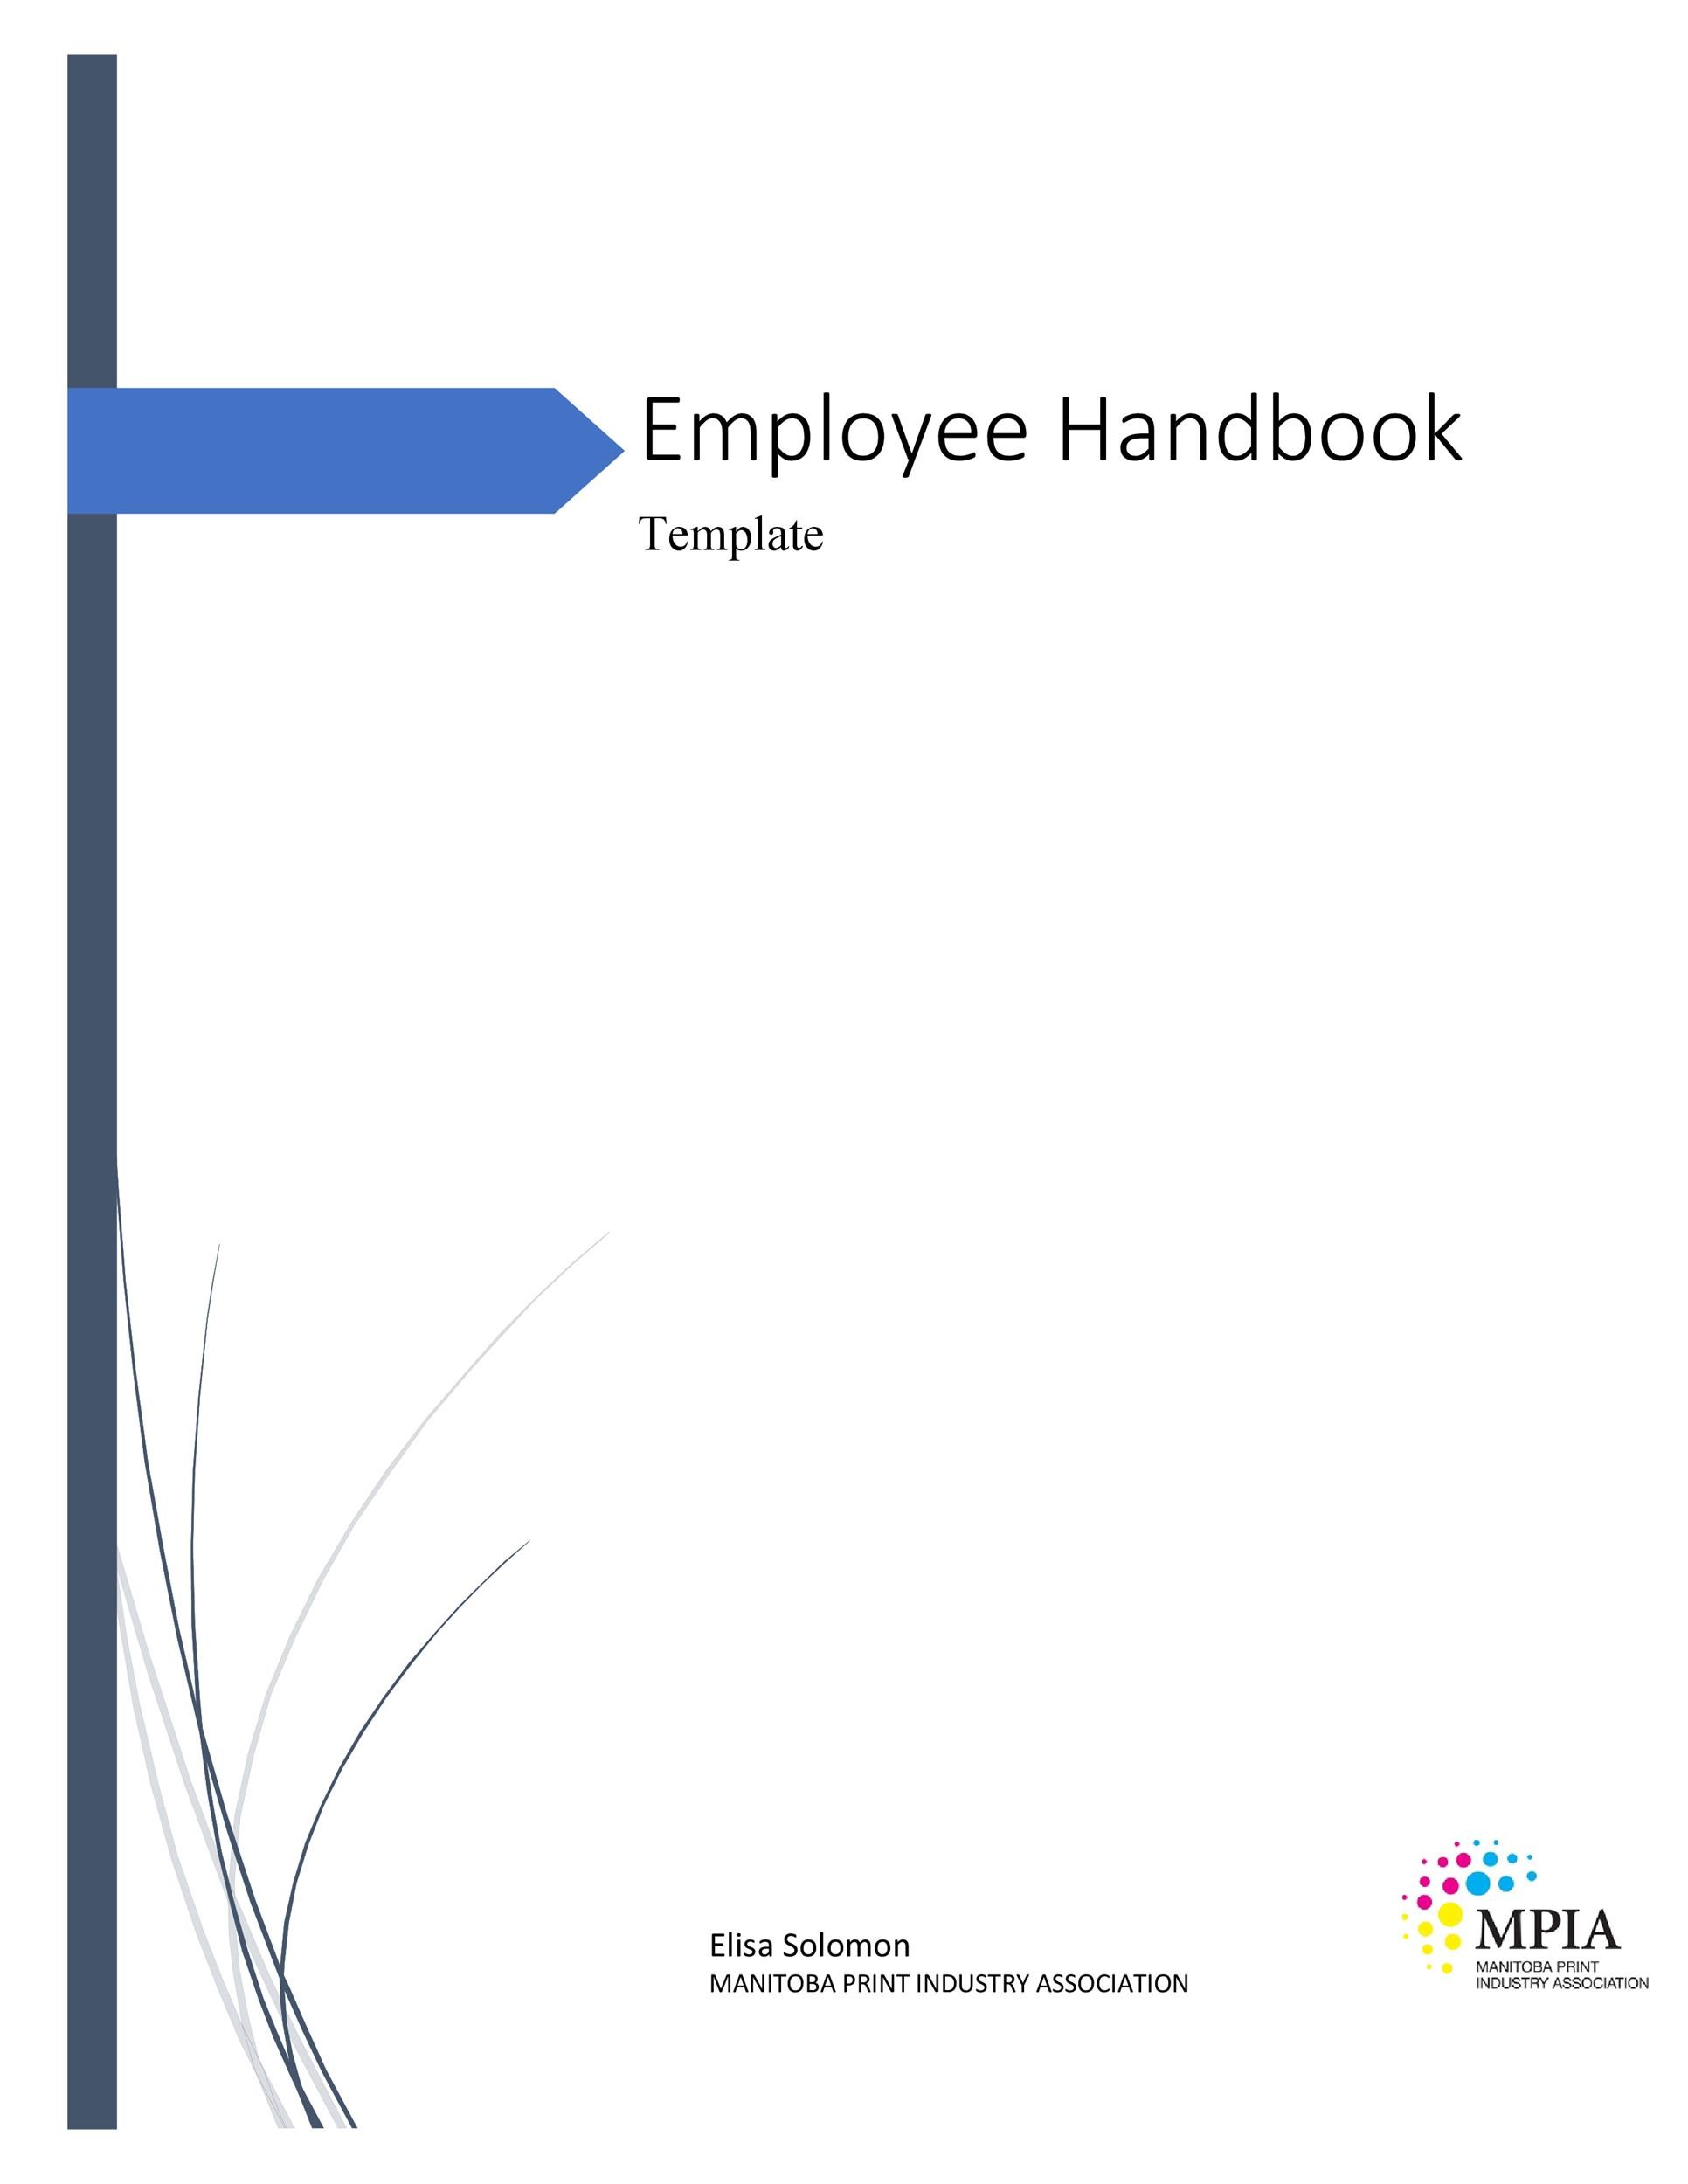 Free employee handbook template 19